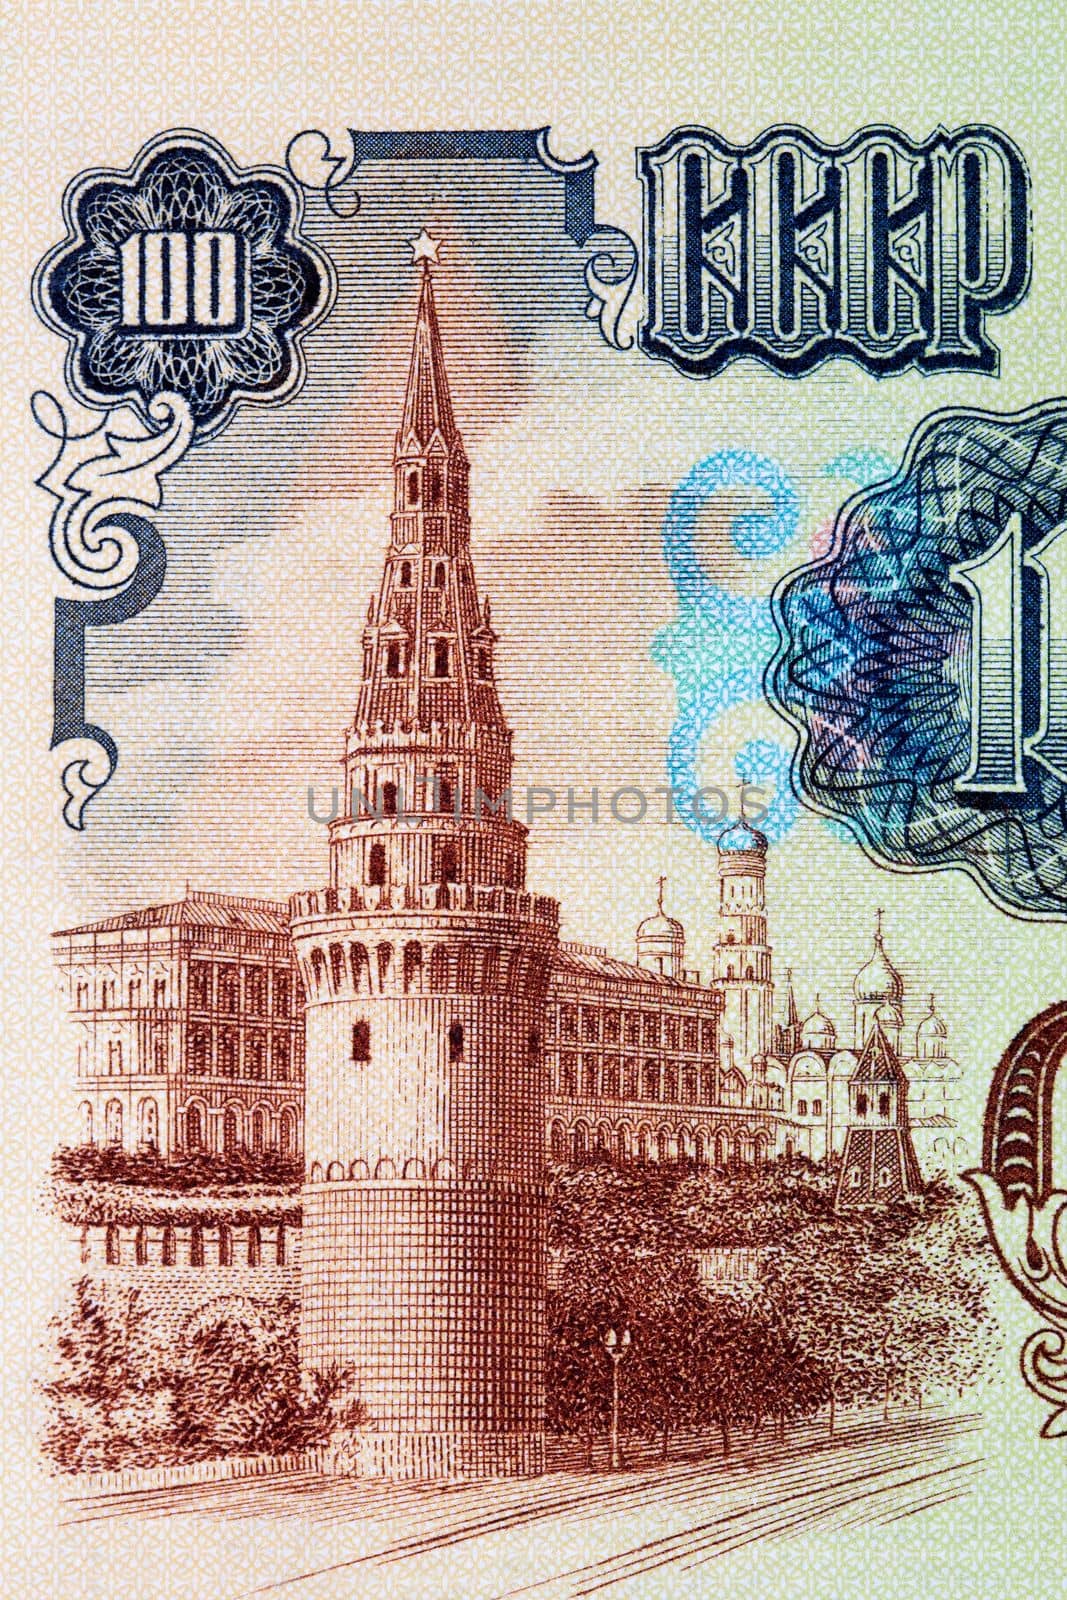 Kremlin Tower from Russian money - ruble by johan10